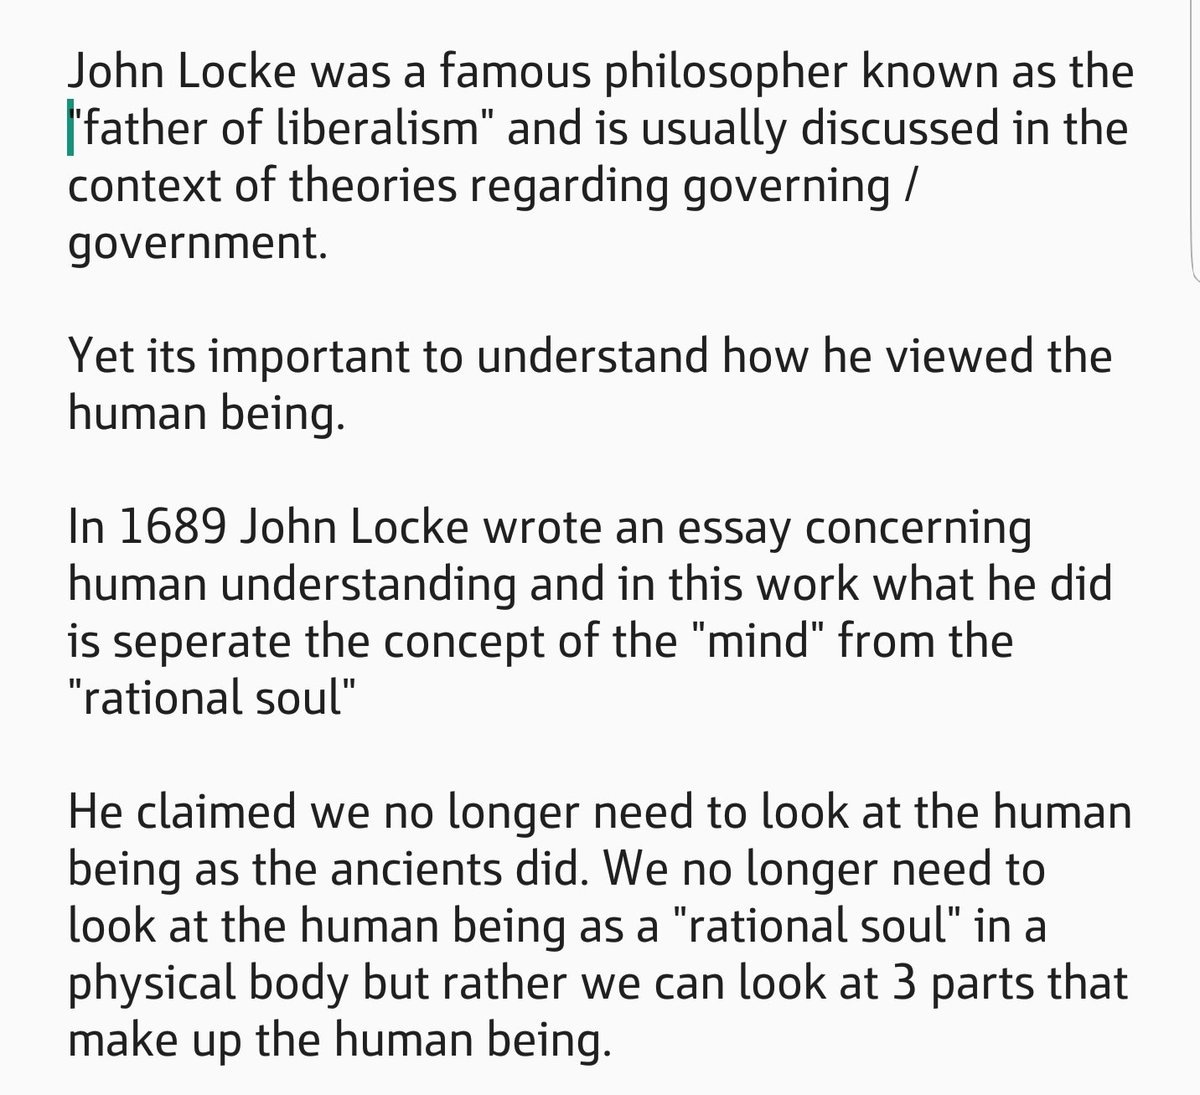 1) How did Philosopher John Locke view the human being?